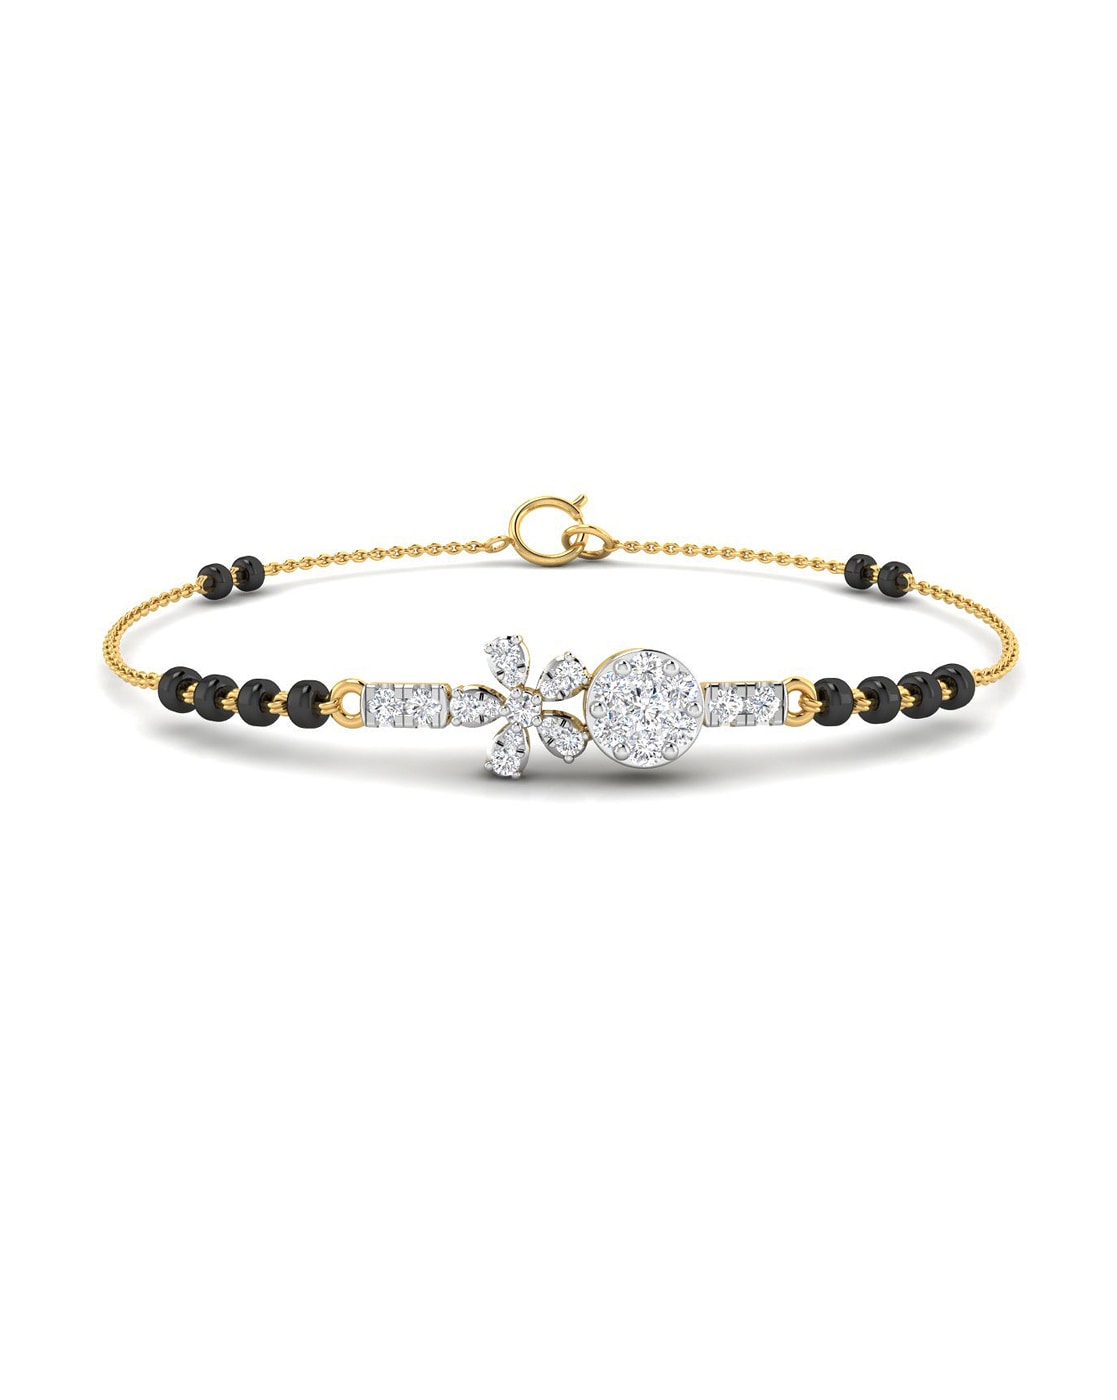 14K White Gold Buttercup Diamond Tennis Bracelet with Rectangle Stations   Diamond bracelet design Fashion bracelets gold Jewelry bracelets gold